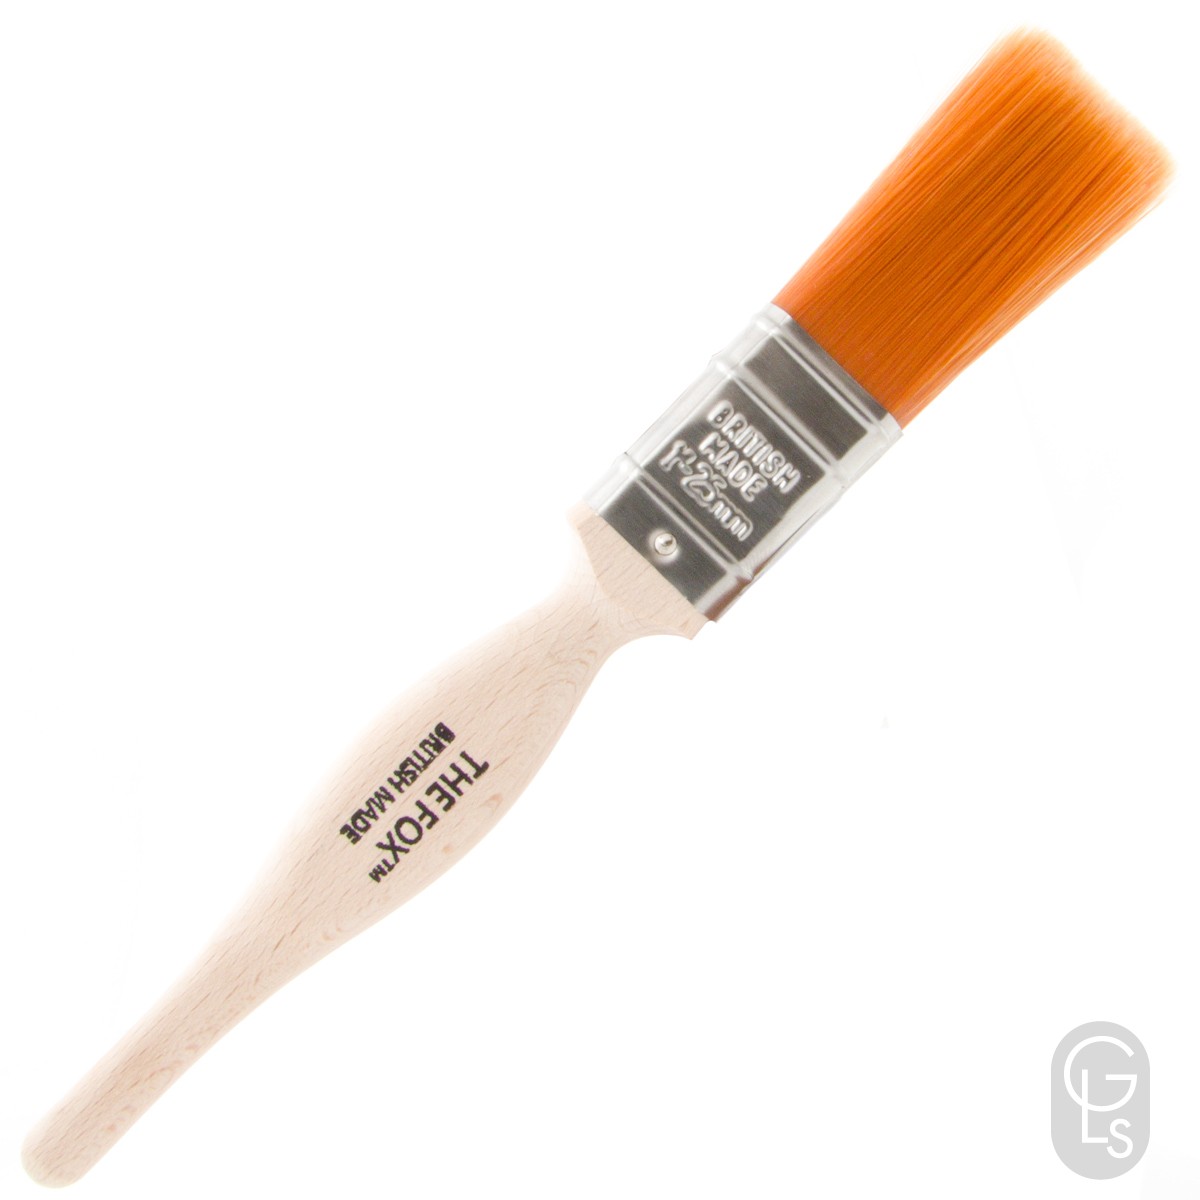 The Fox Straight Cut Paint Brush 1 inch